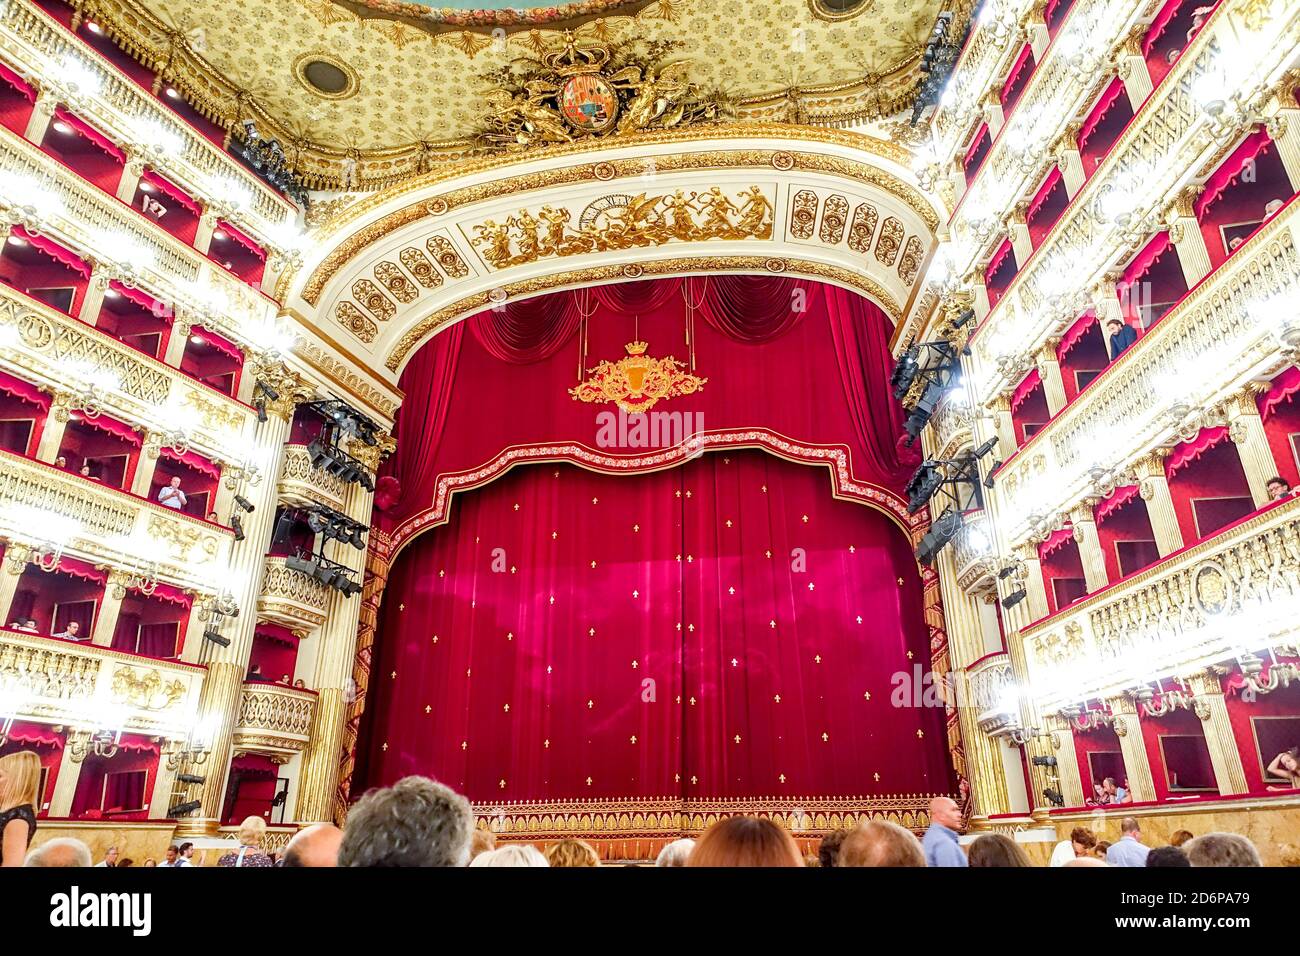 Das Teatro reale di San Carlo (Königliches Theater von Saint Charles), Bourbon Monarchie, neapel italien, Interieur Stockfoto